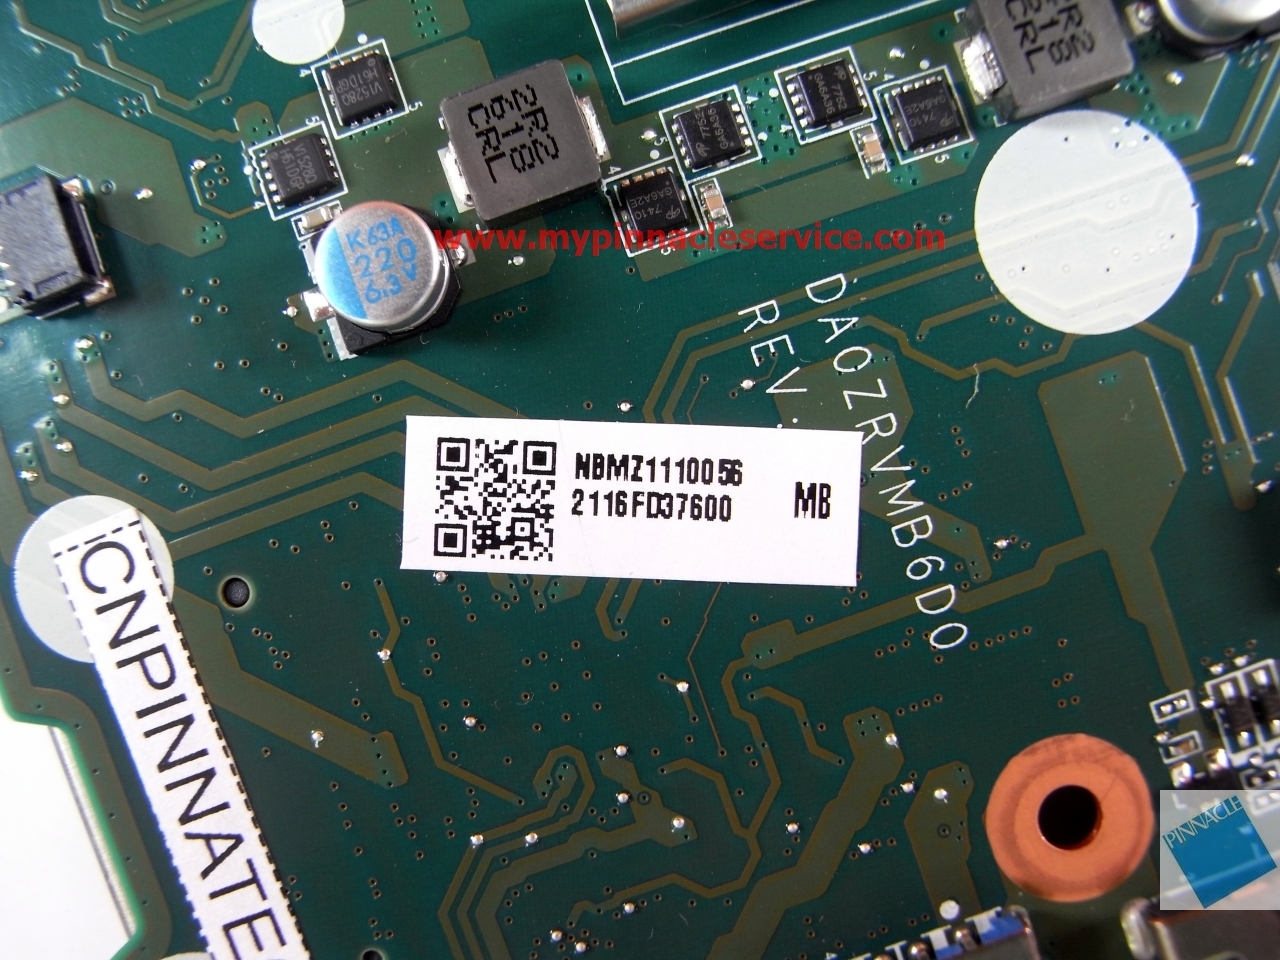 nbmz111005-motherboard-for-acer-asipre-e5-532g-n3150-920m-da0zrvmb6d0-r0013441.jpg